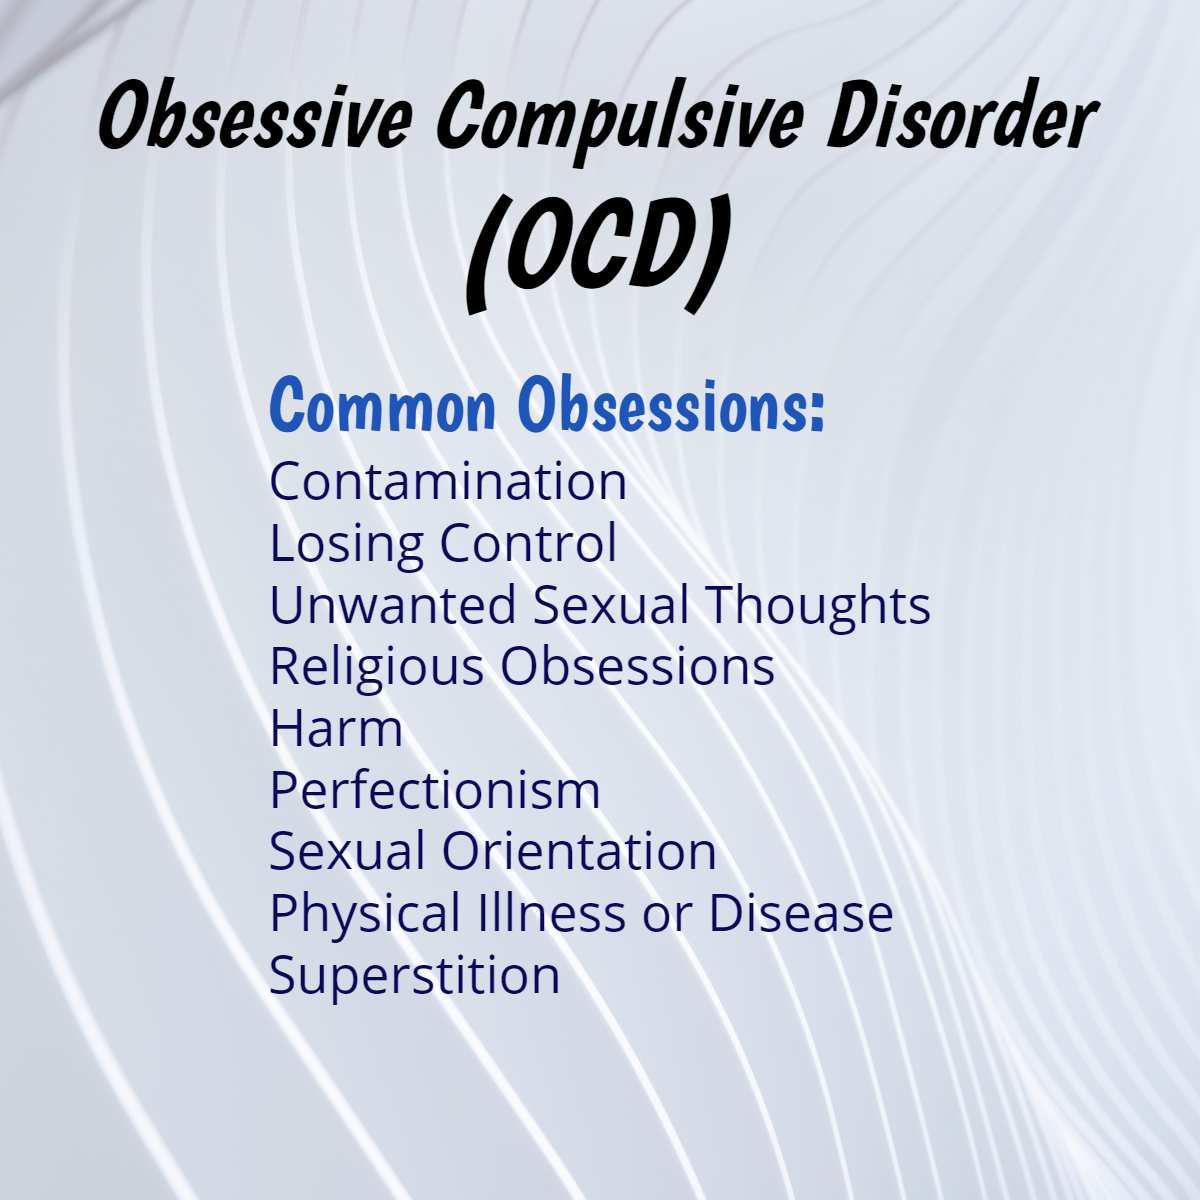 Obsessive compulsive disorder (OCD)